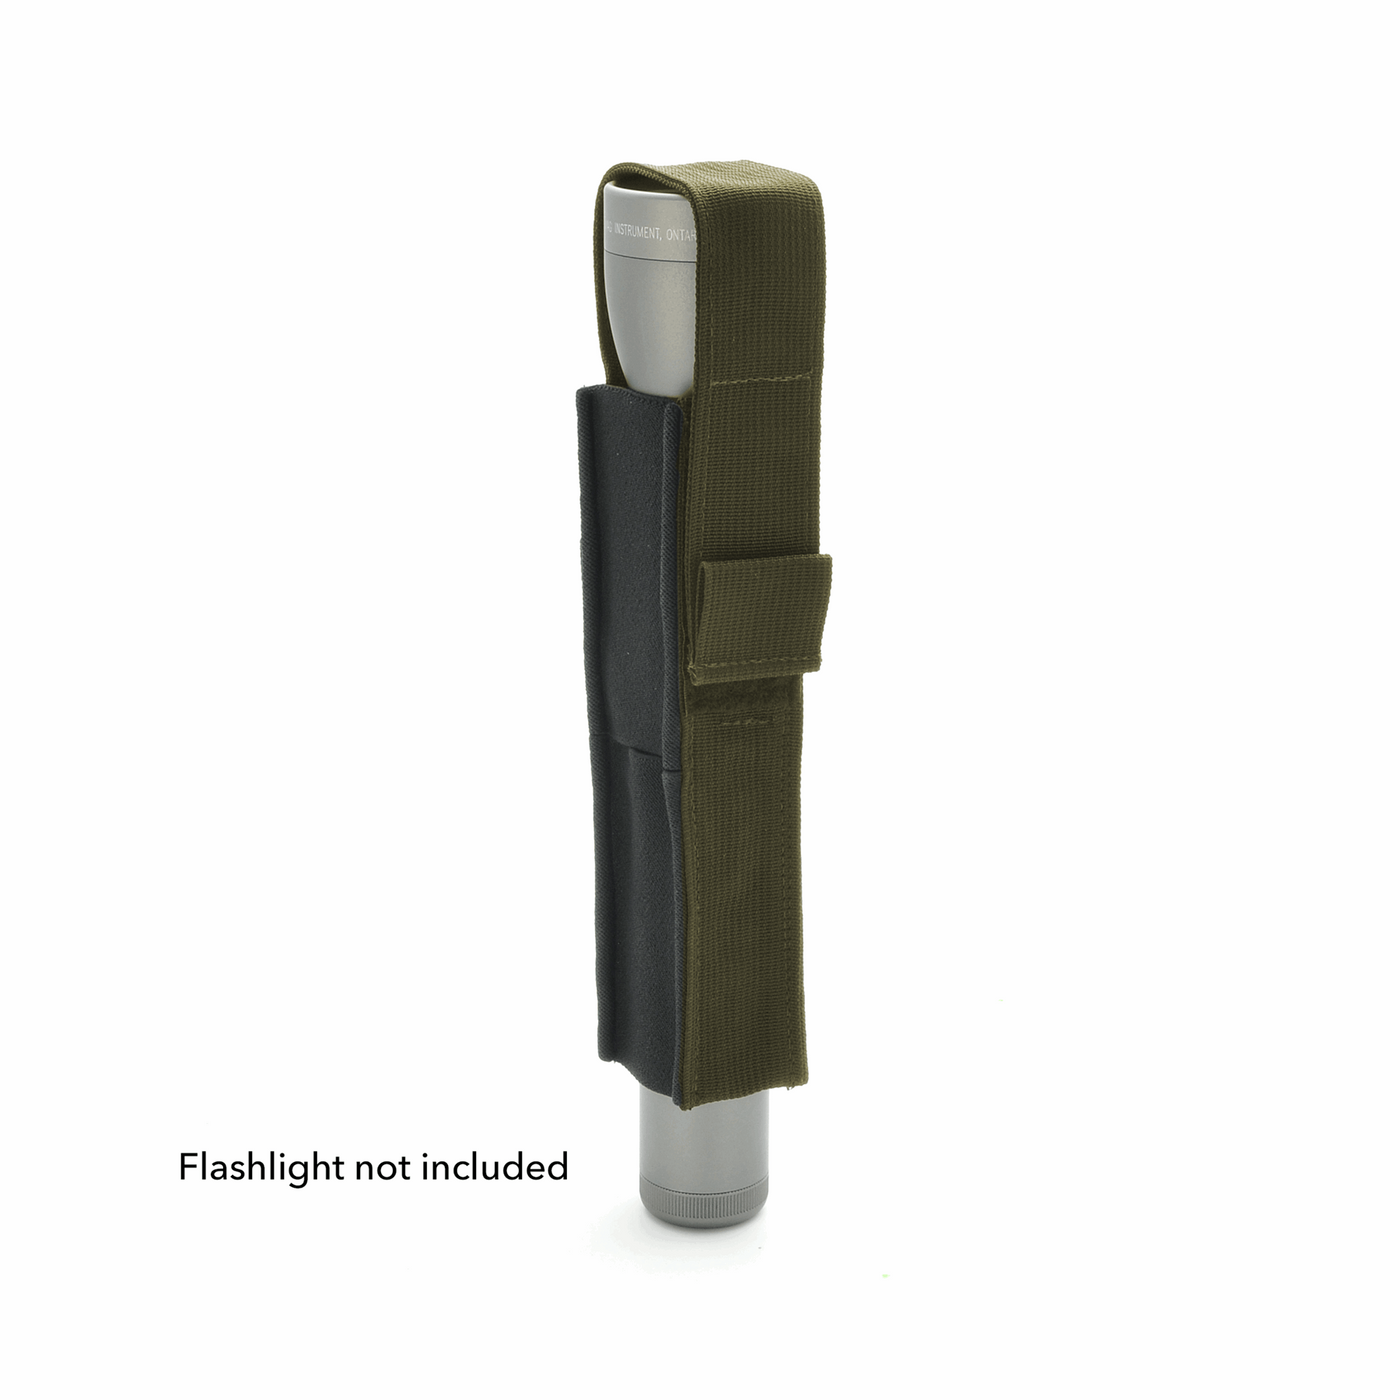 Flashlight Holder - Ranger Green